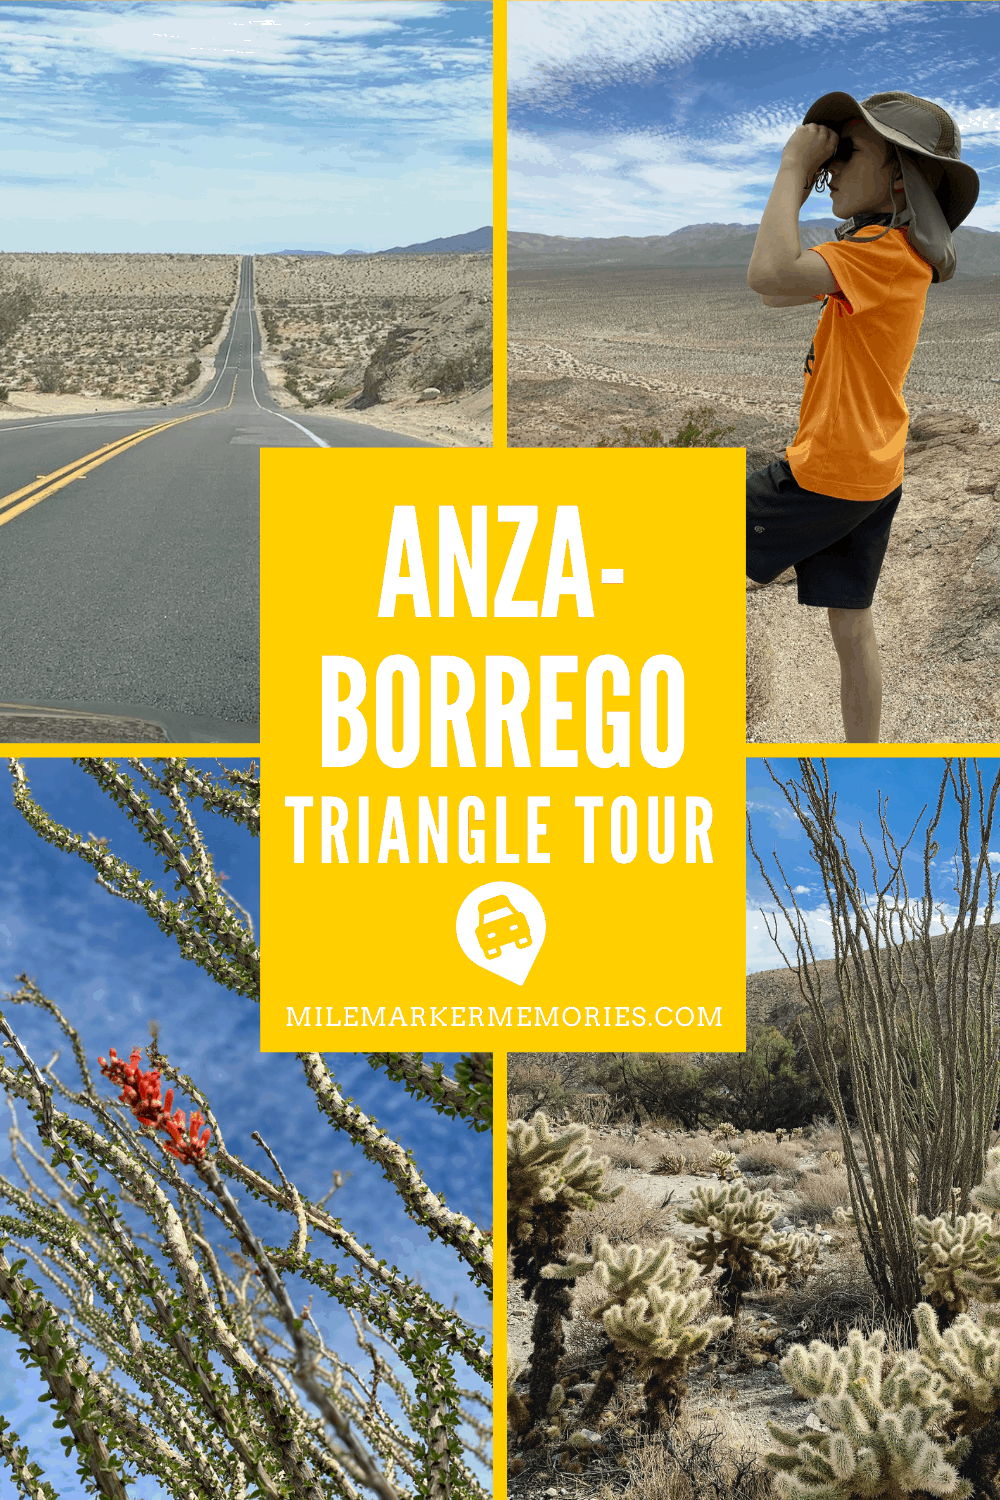 Anza-Borrego Triangle Tour Guide